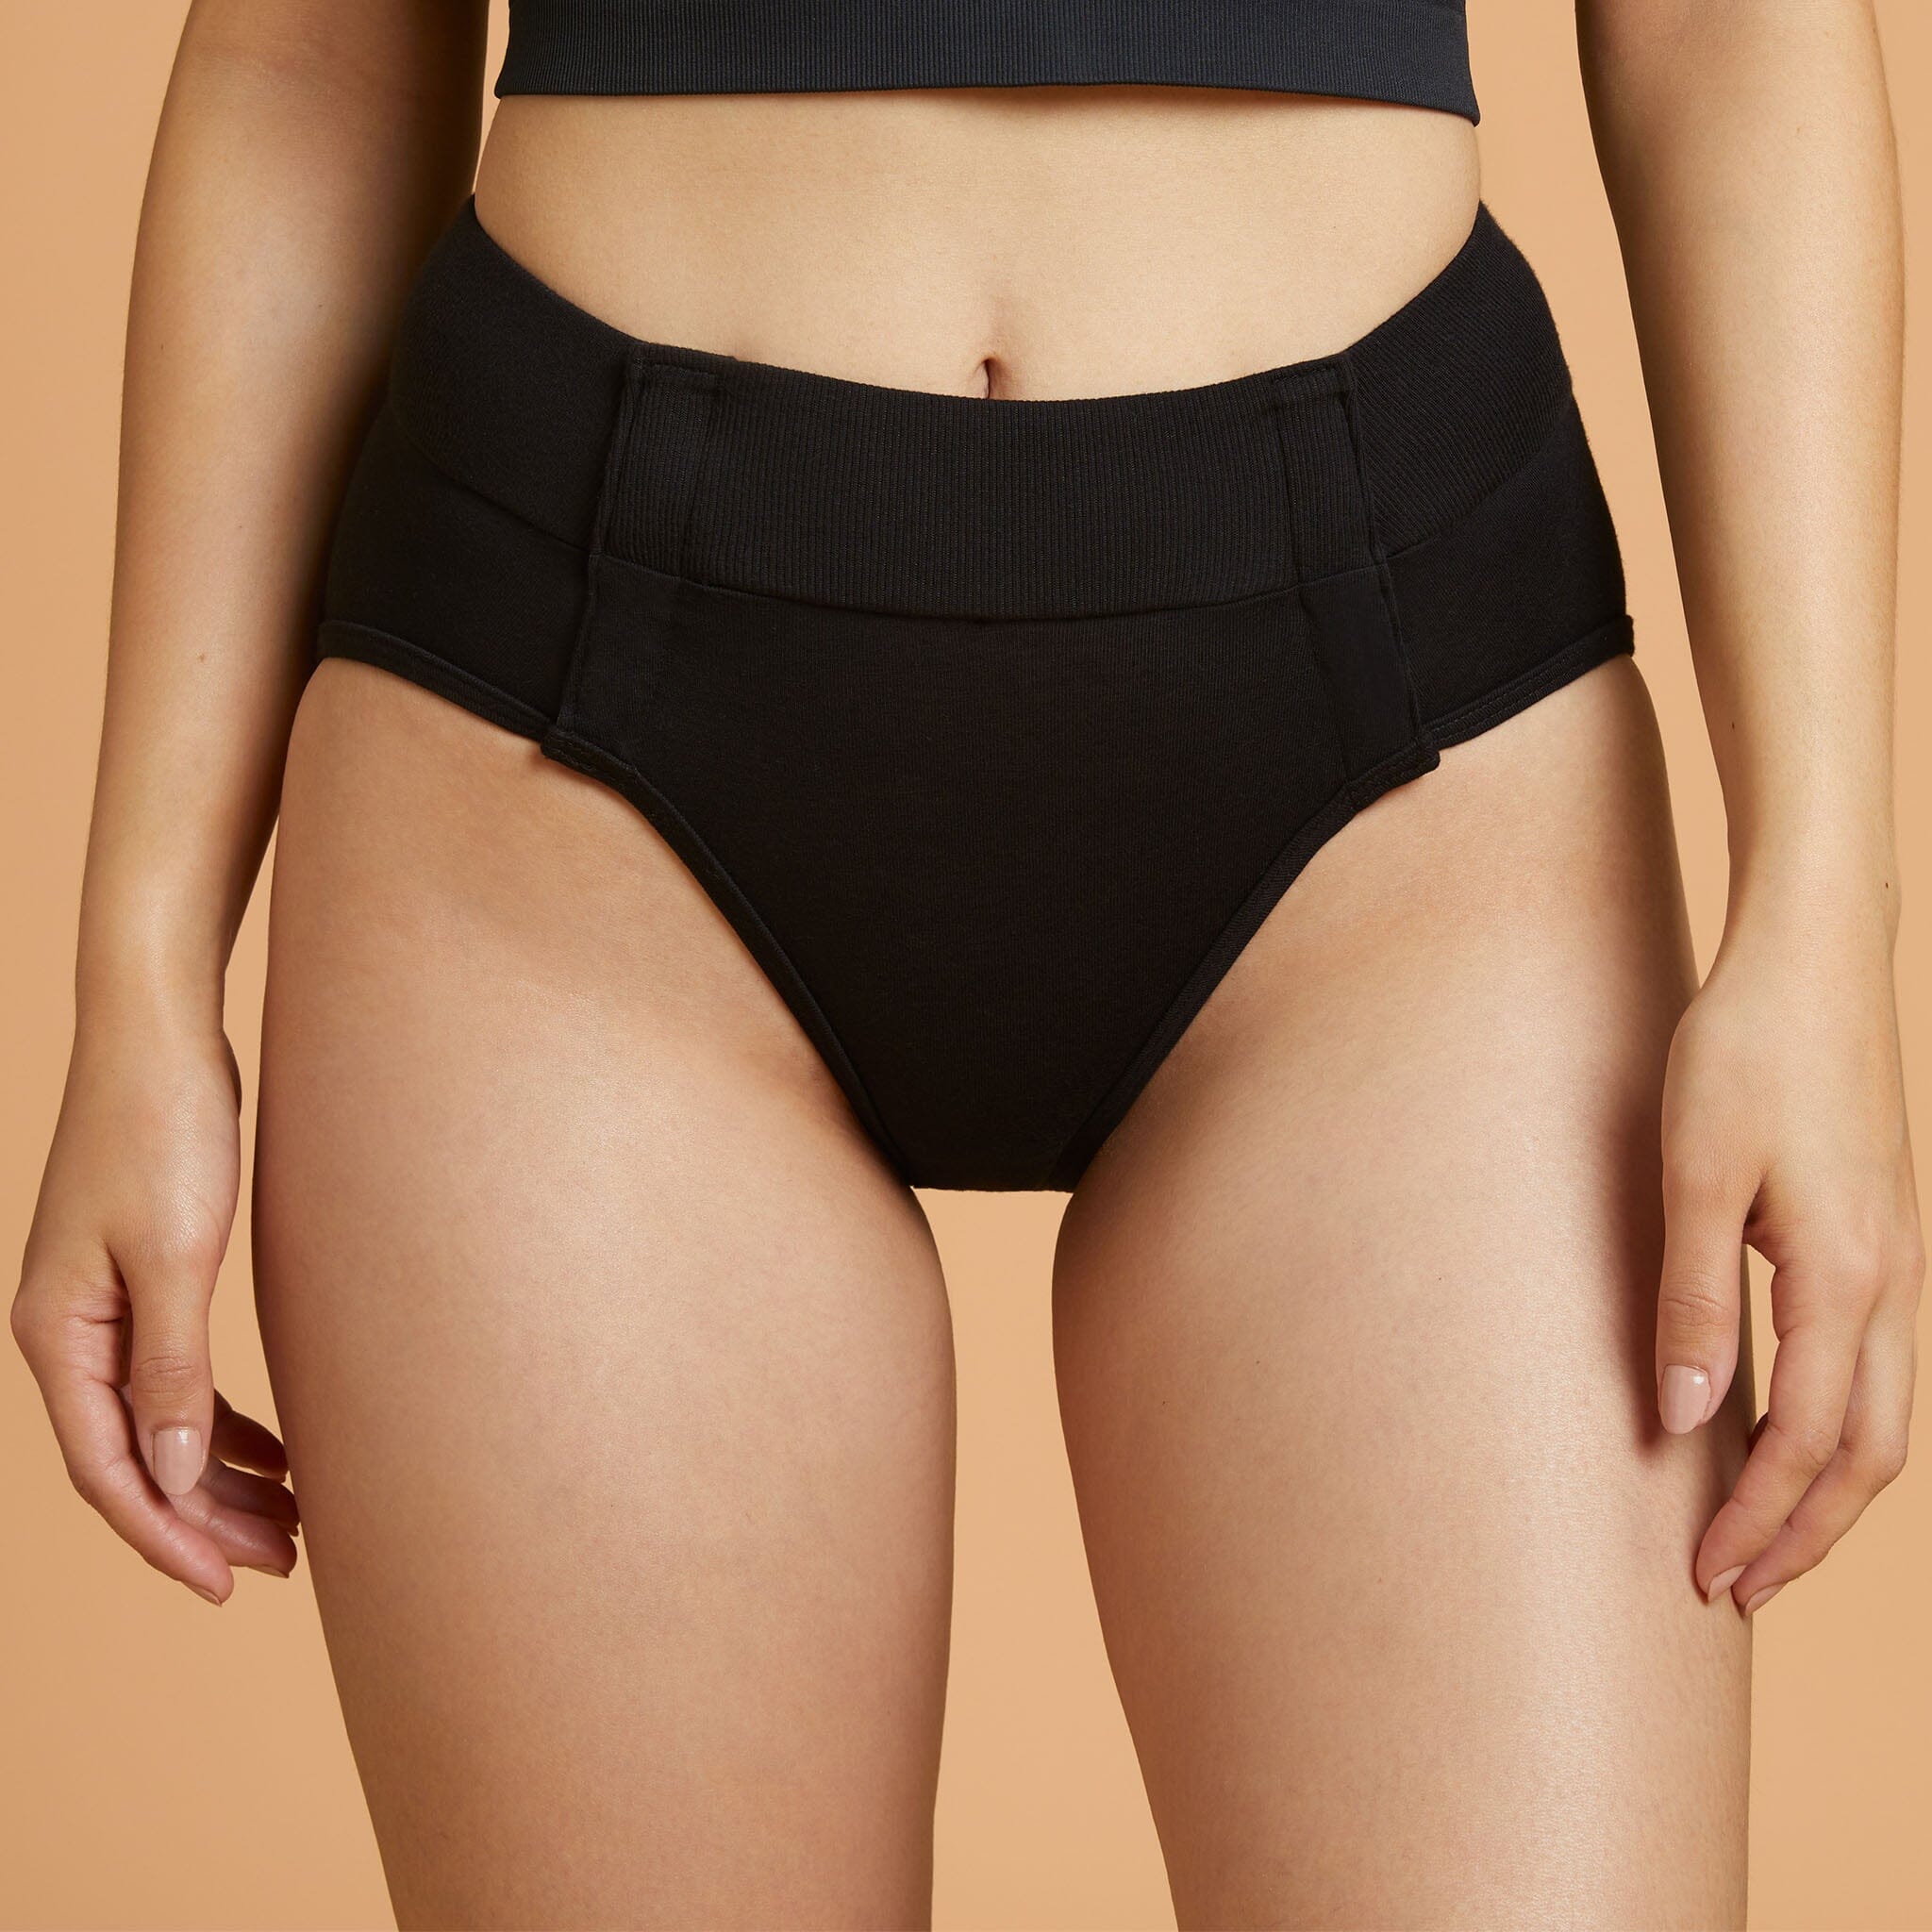 Calvin Klein Circle Of Women microfiber high waist briefs in umber